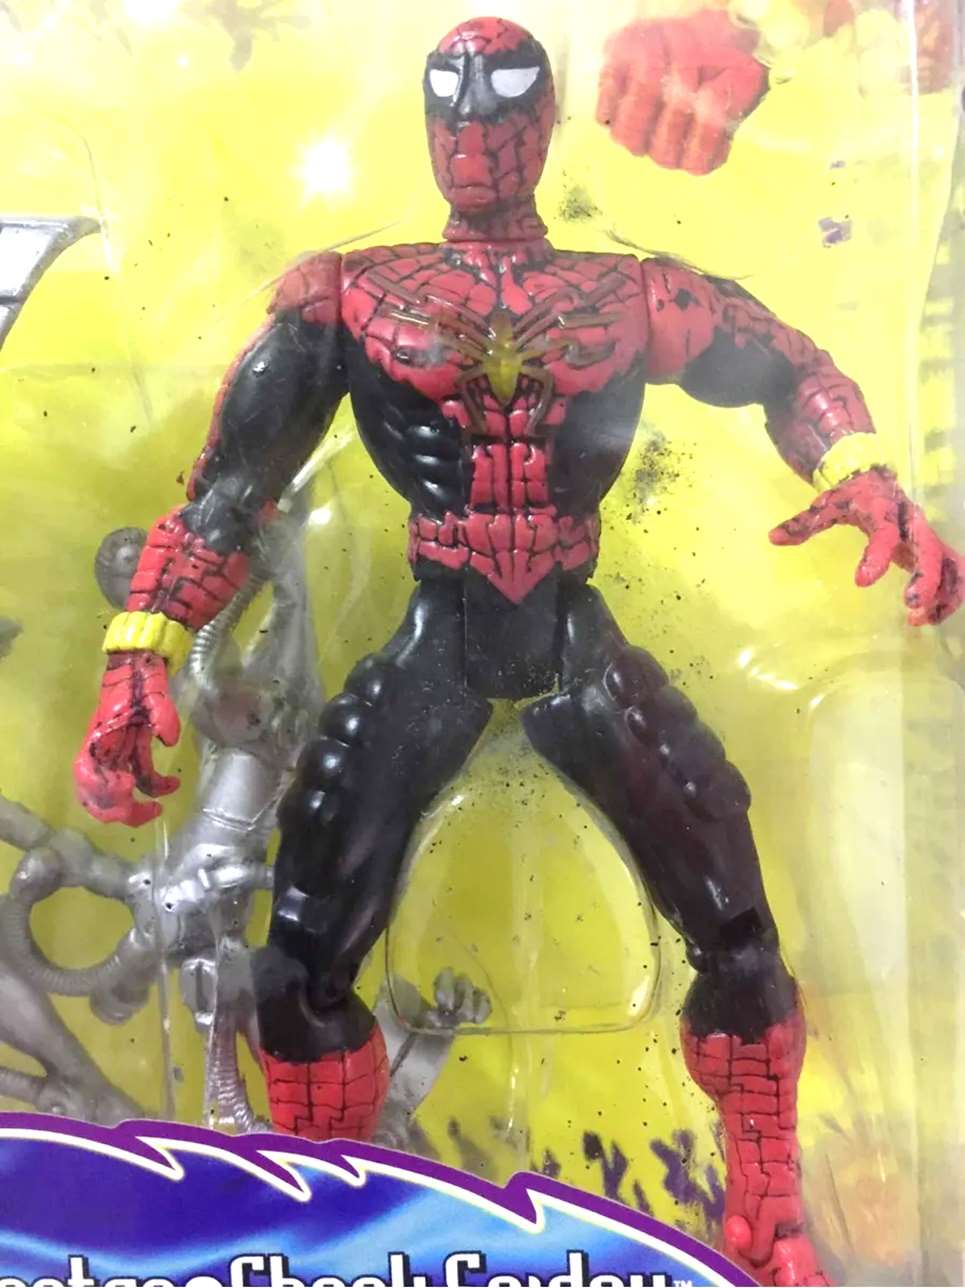 Electro Shock Spidey 1996 Spider Man Electro Spark Toybiz